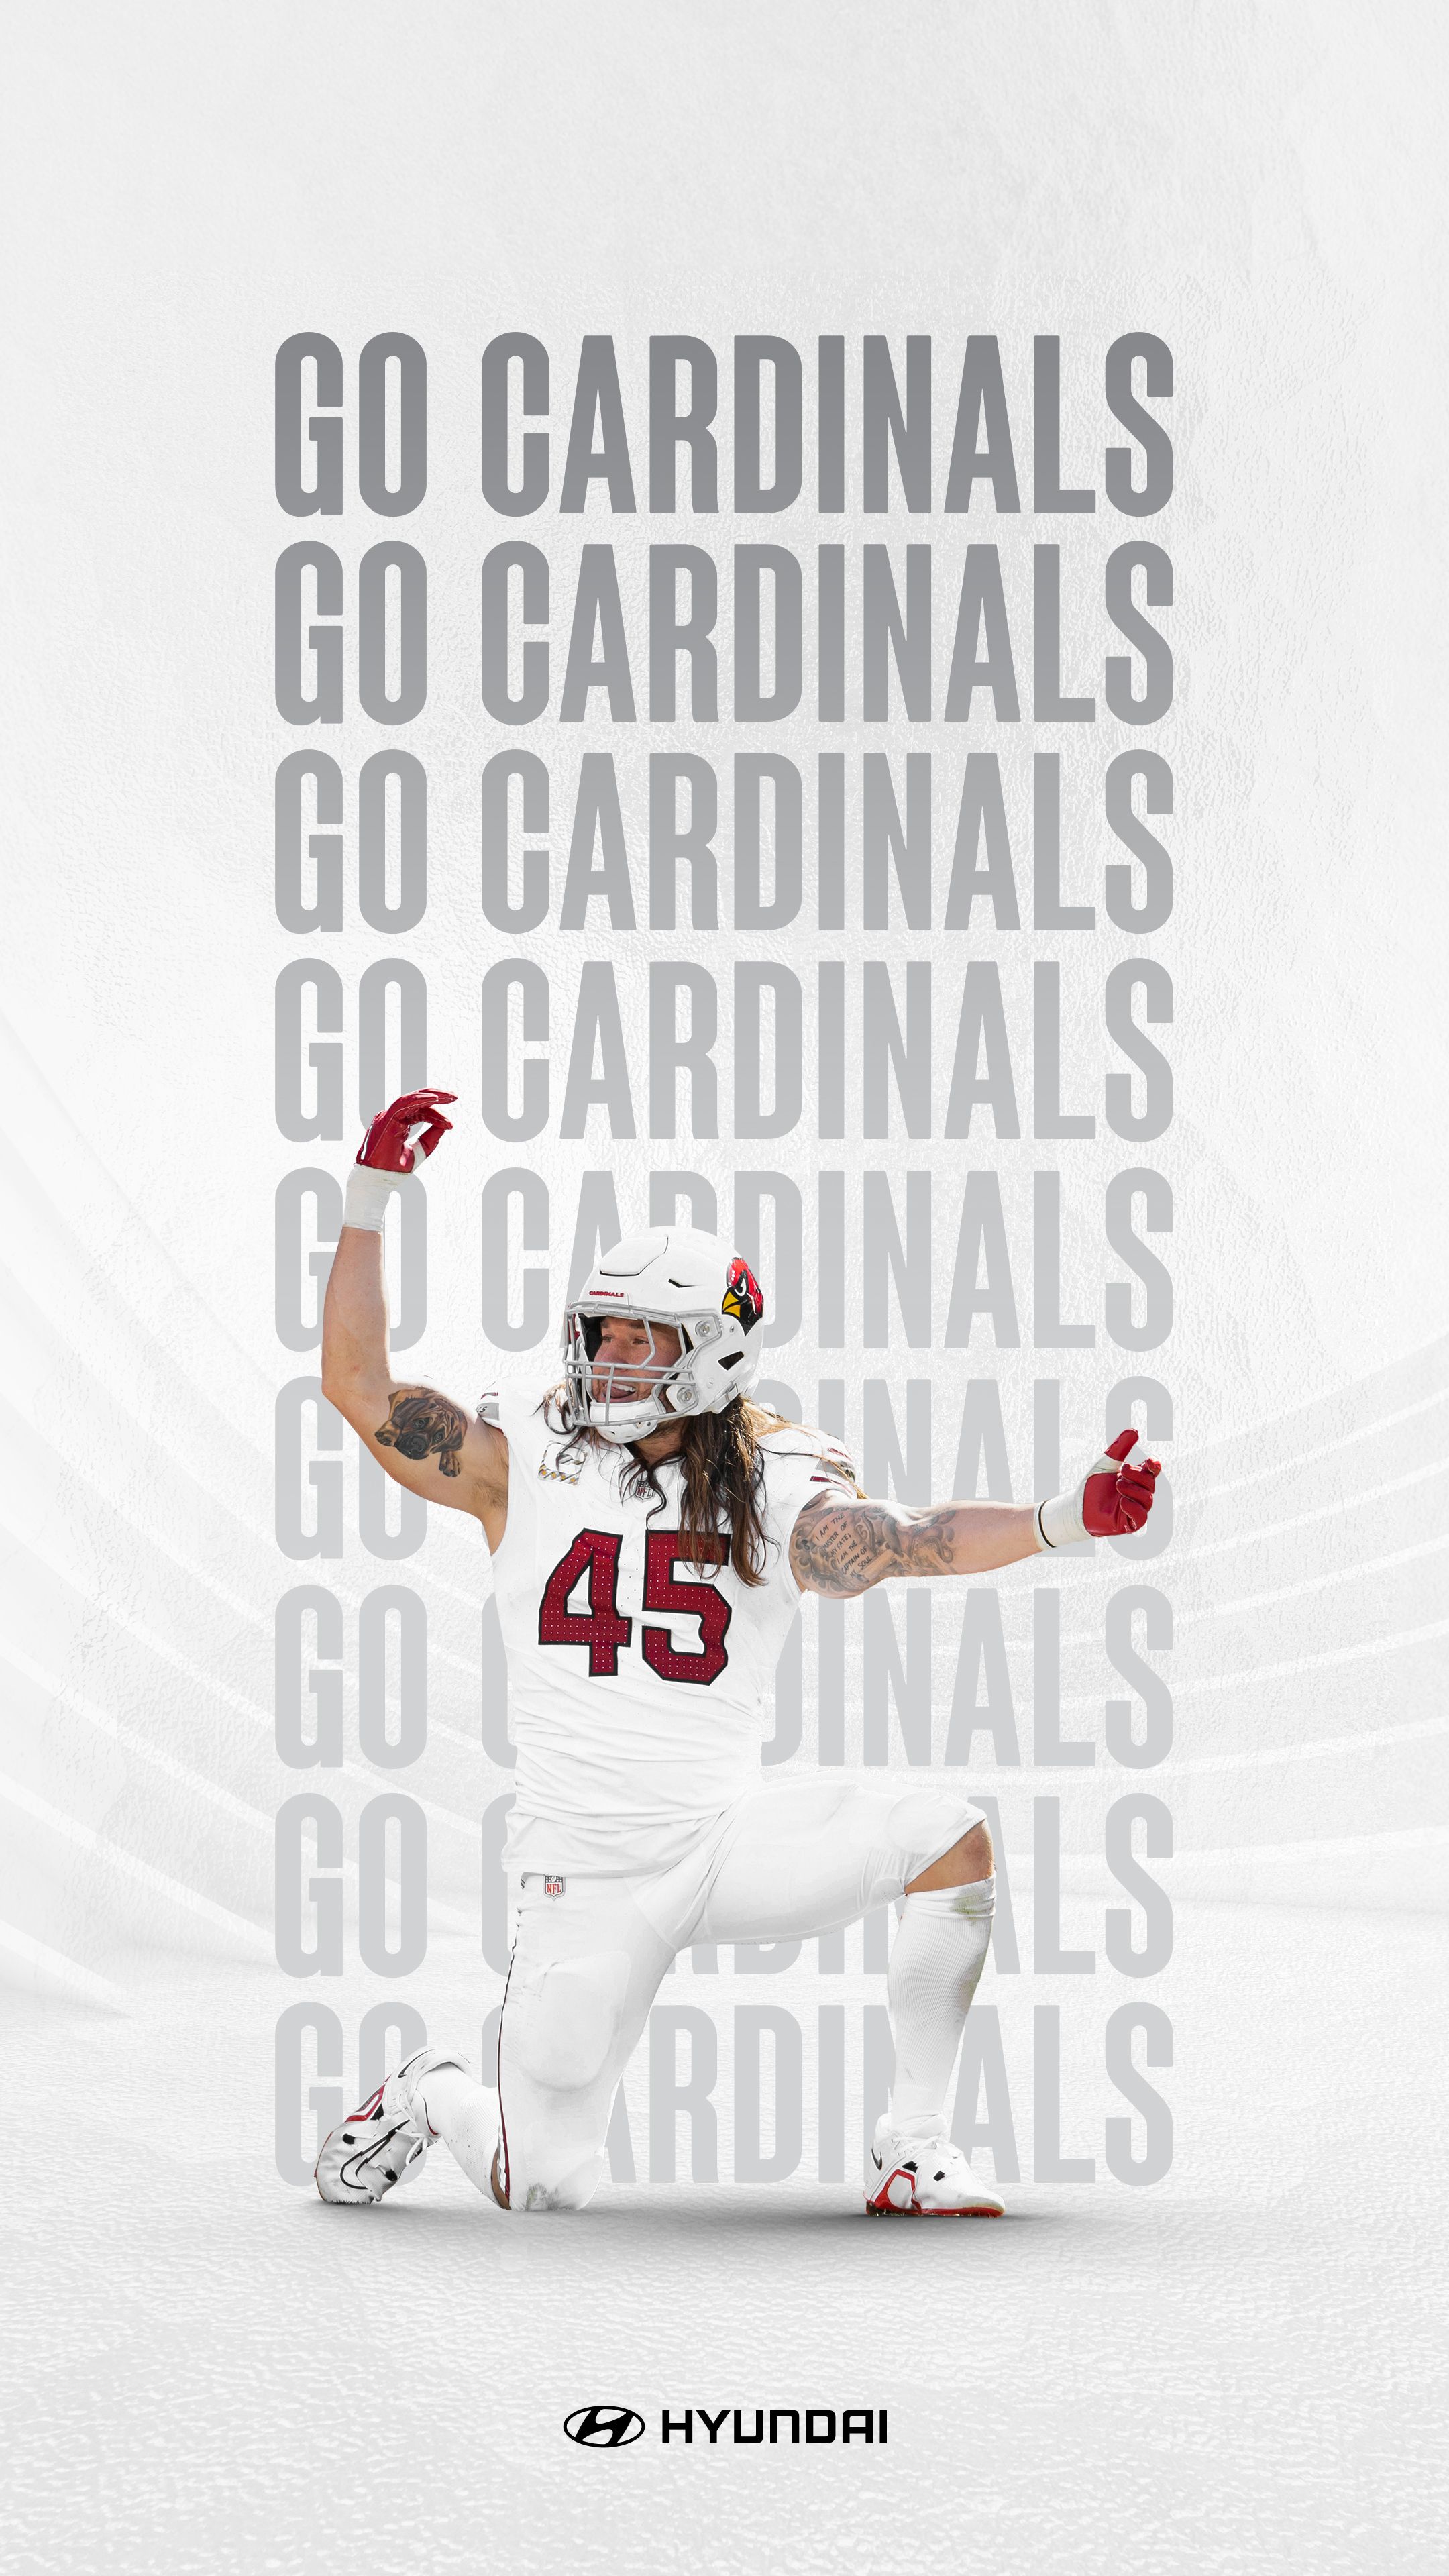 Arizona Cardinals on X: A @ChristianDavon2 wallpaper for